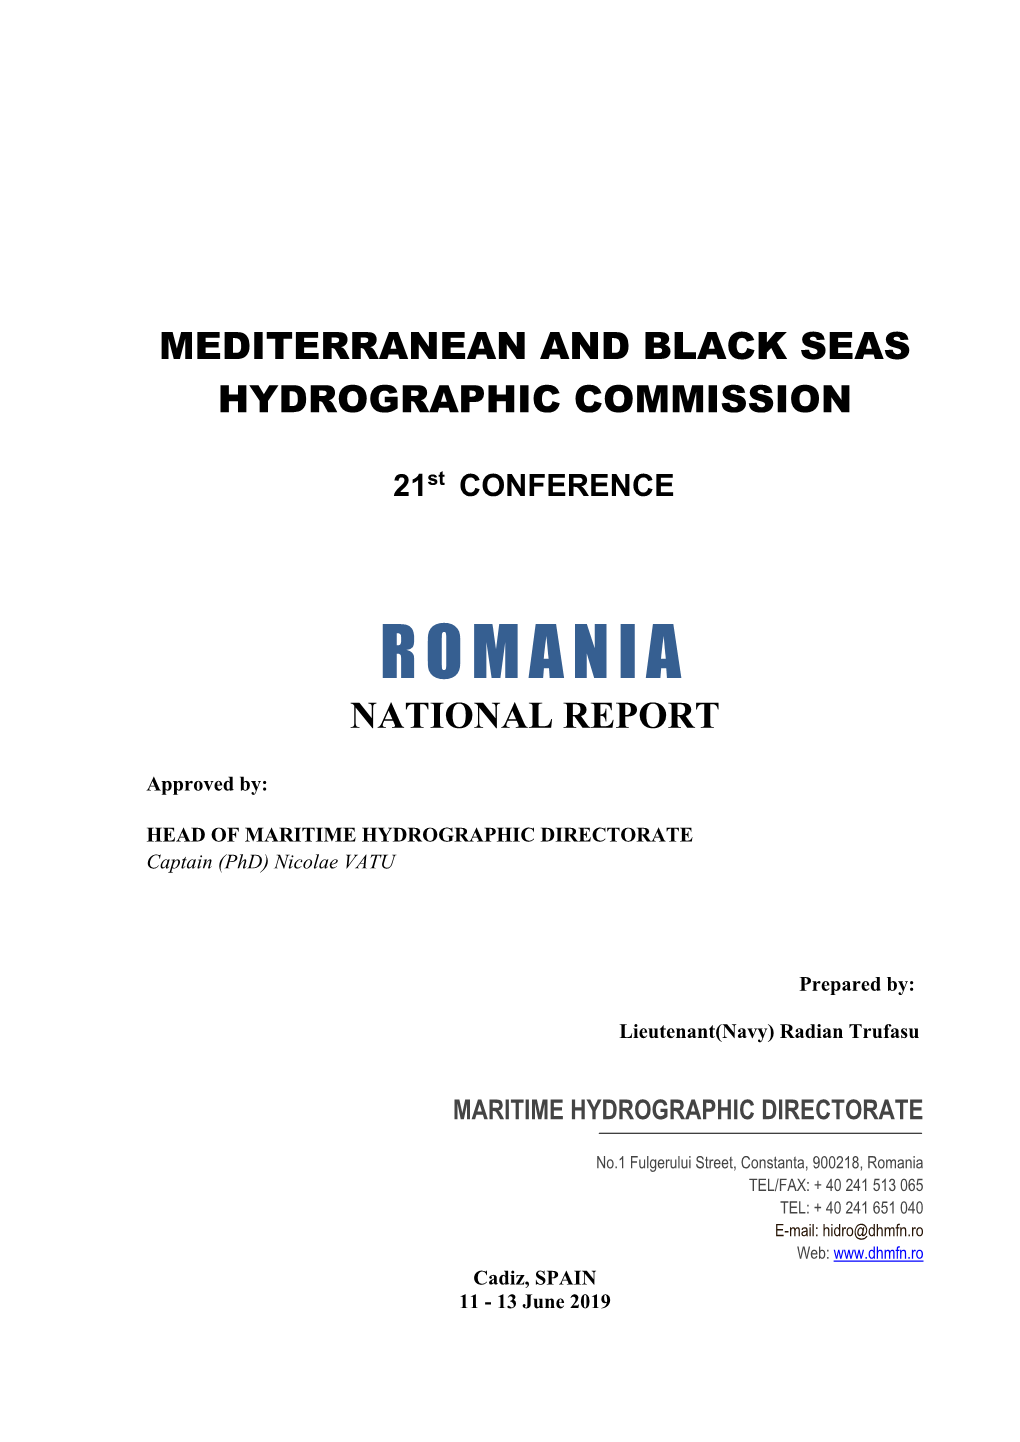 Romania National Report